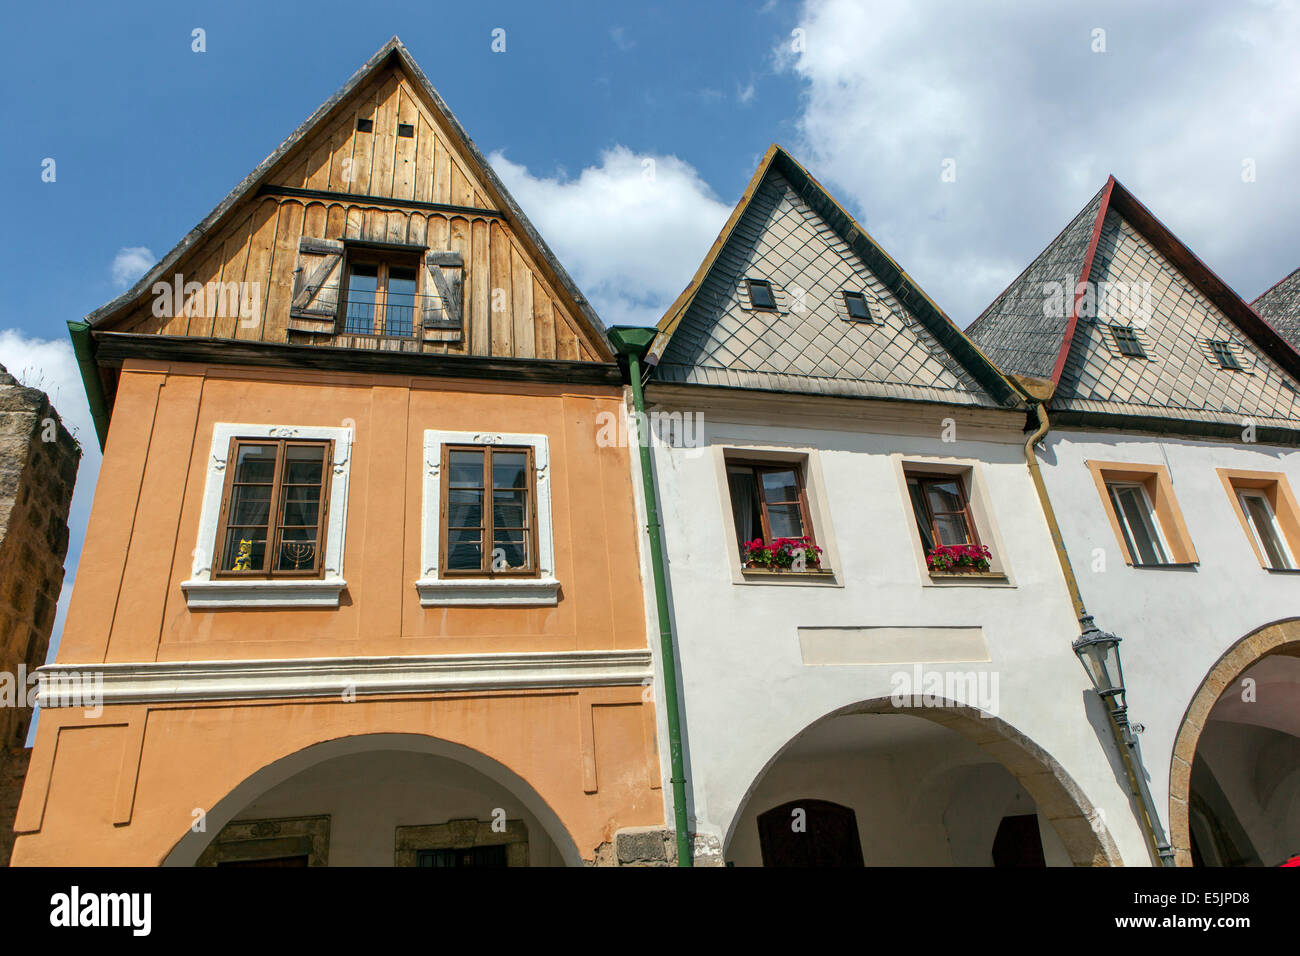 Mustek Tschechische Republik, Giebelhäuser am Marktplatz Stockfoto